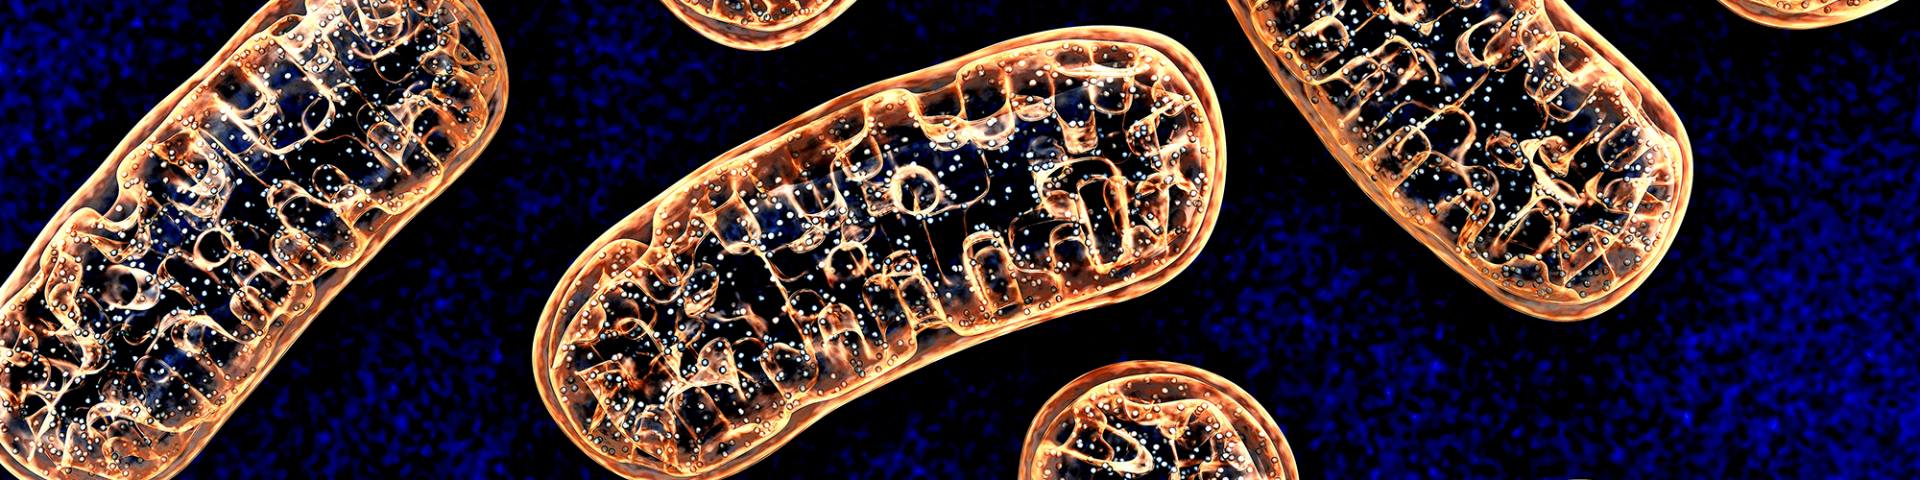 Mitochondrial/Chloroplast DNA isolation